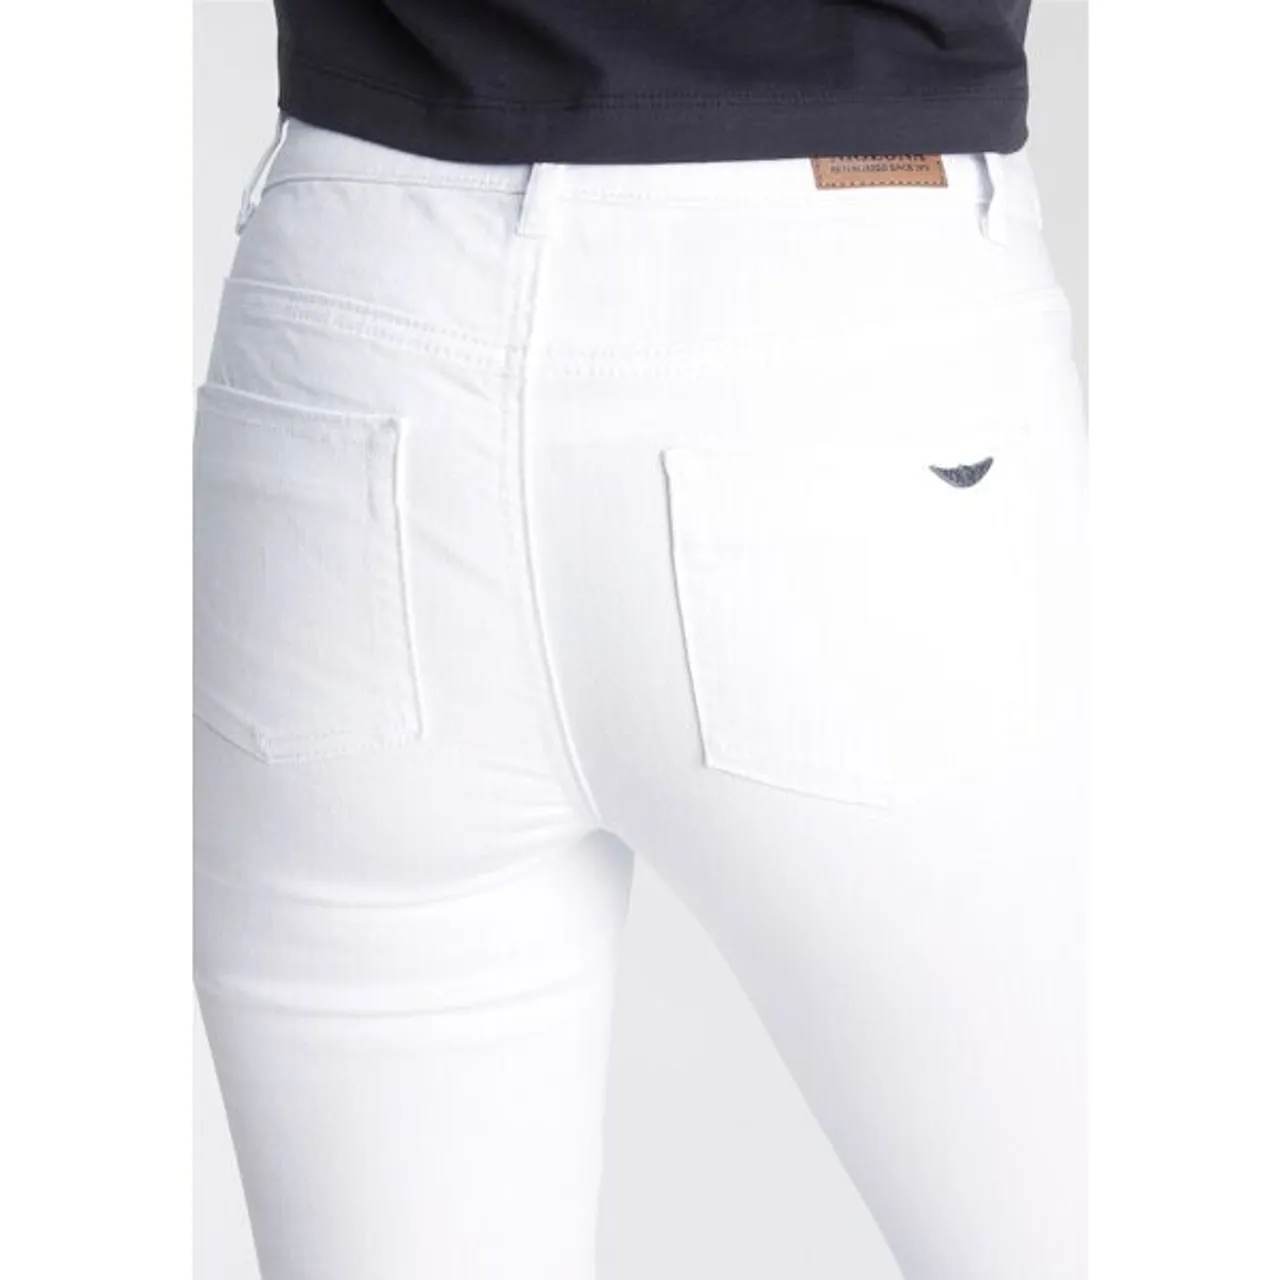 Skinny-fit-Jeans ARIZONA "Shaping" Gr. 17, K + L Gr, weiß (white) Damen Jeans Röhrenjeans High Waist Bestseller